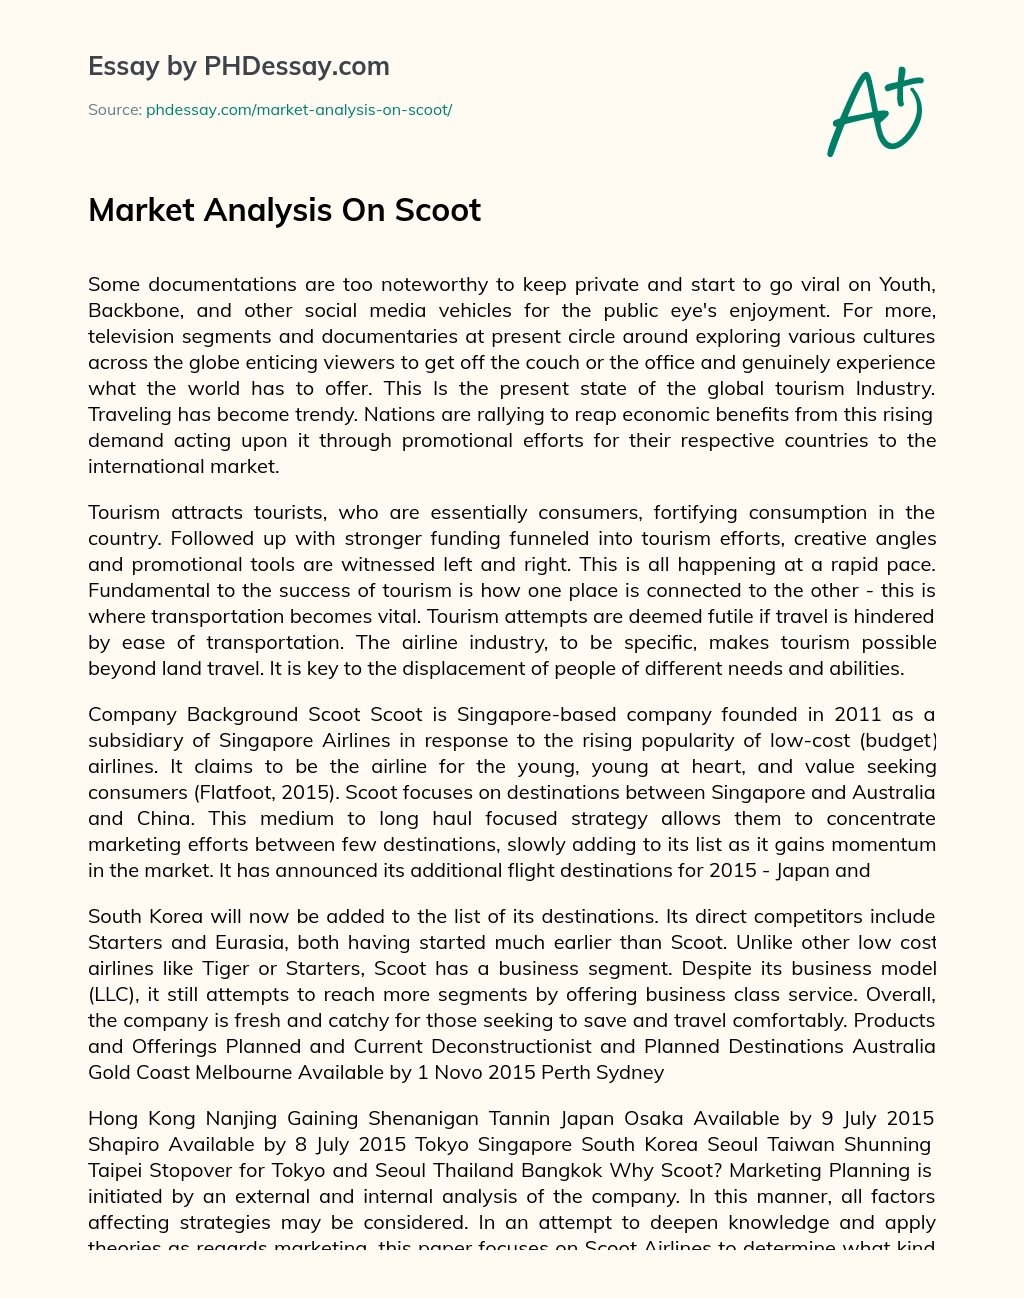 Market Analysis On Scoot essay